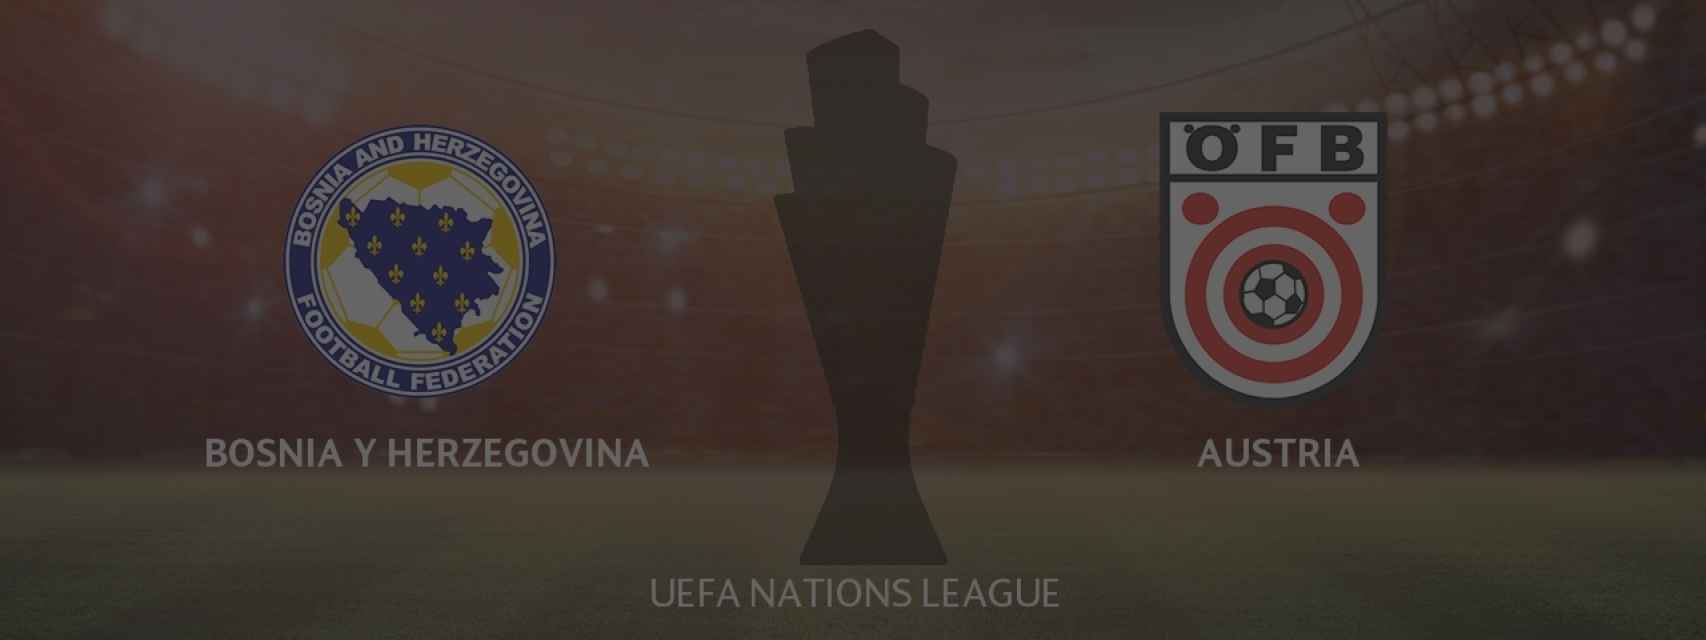 Bosnia y Herzegovina - Austria, UEFA Nations League